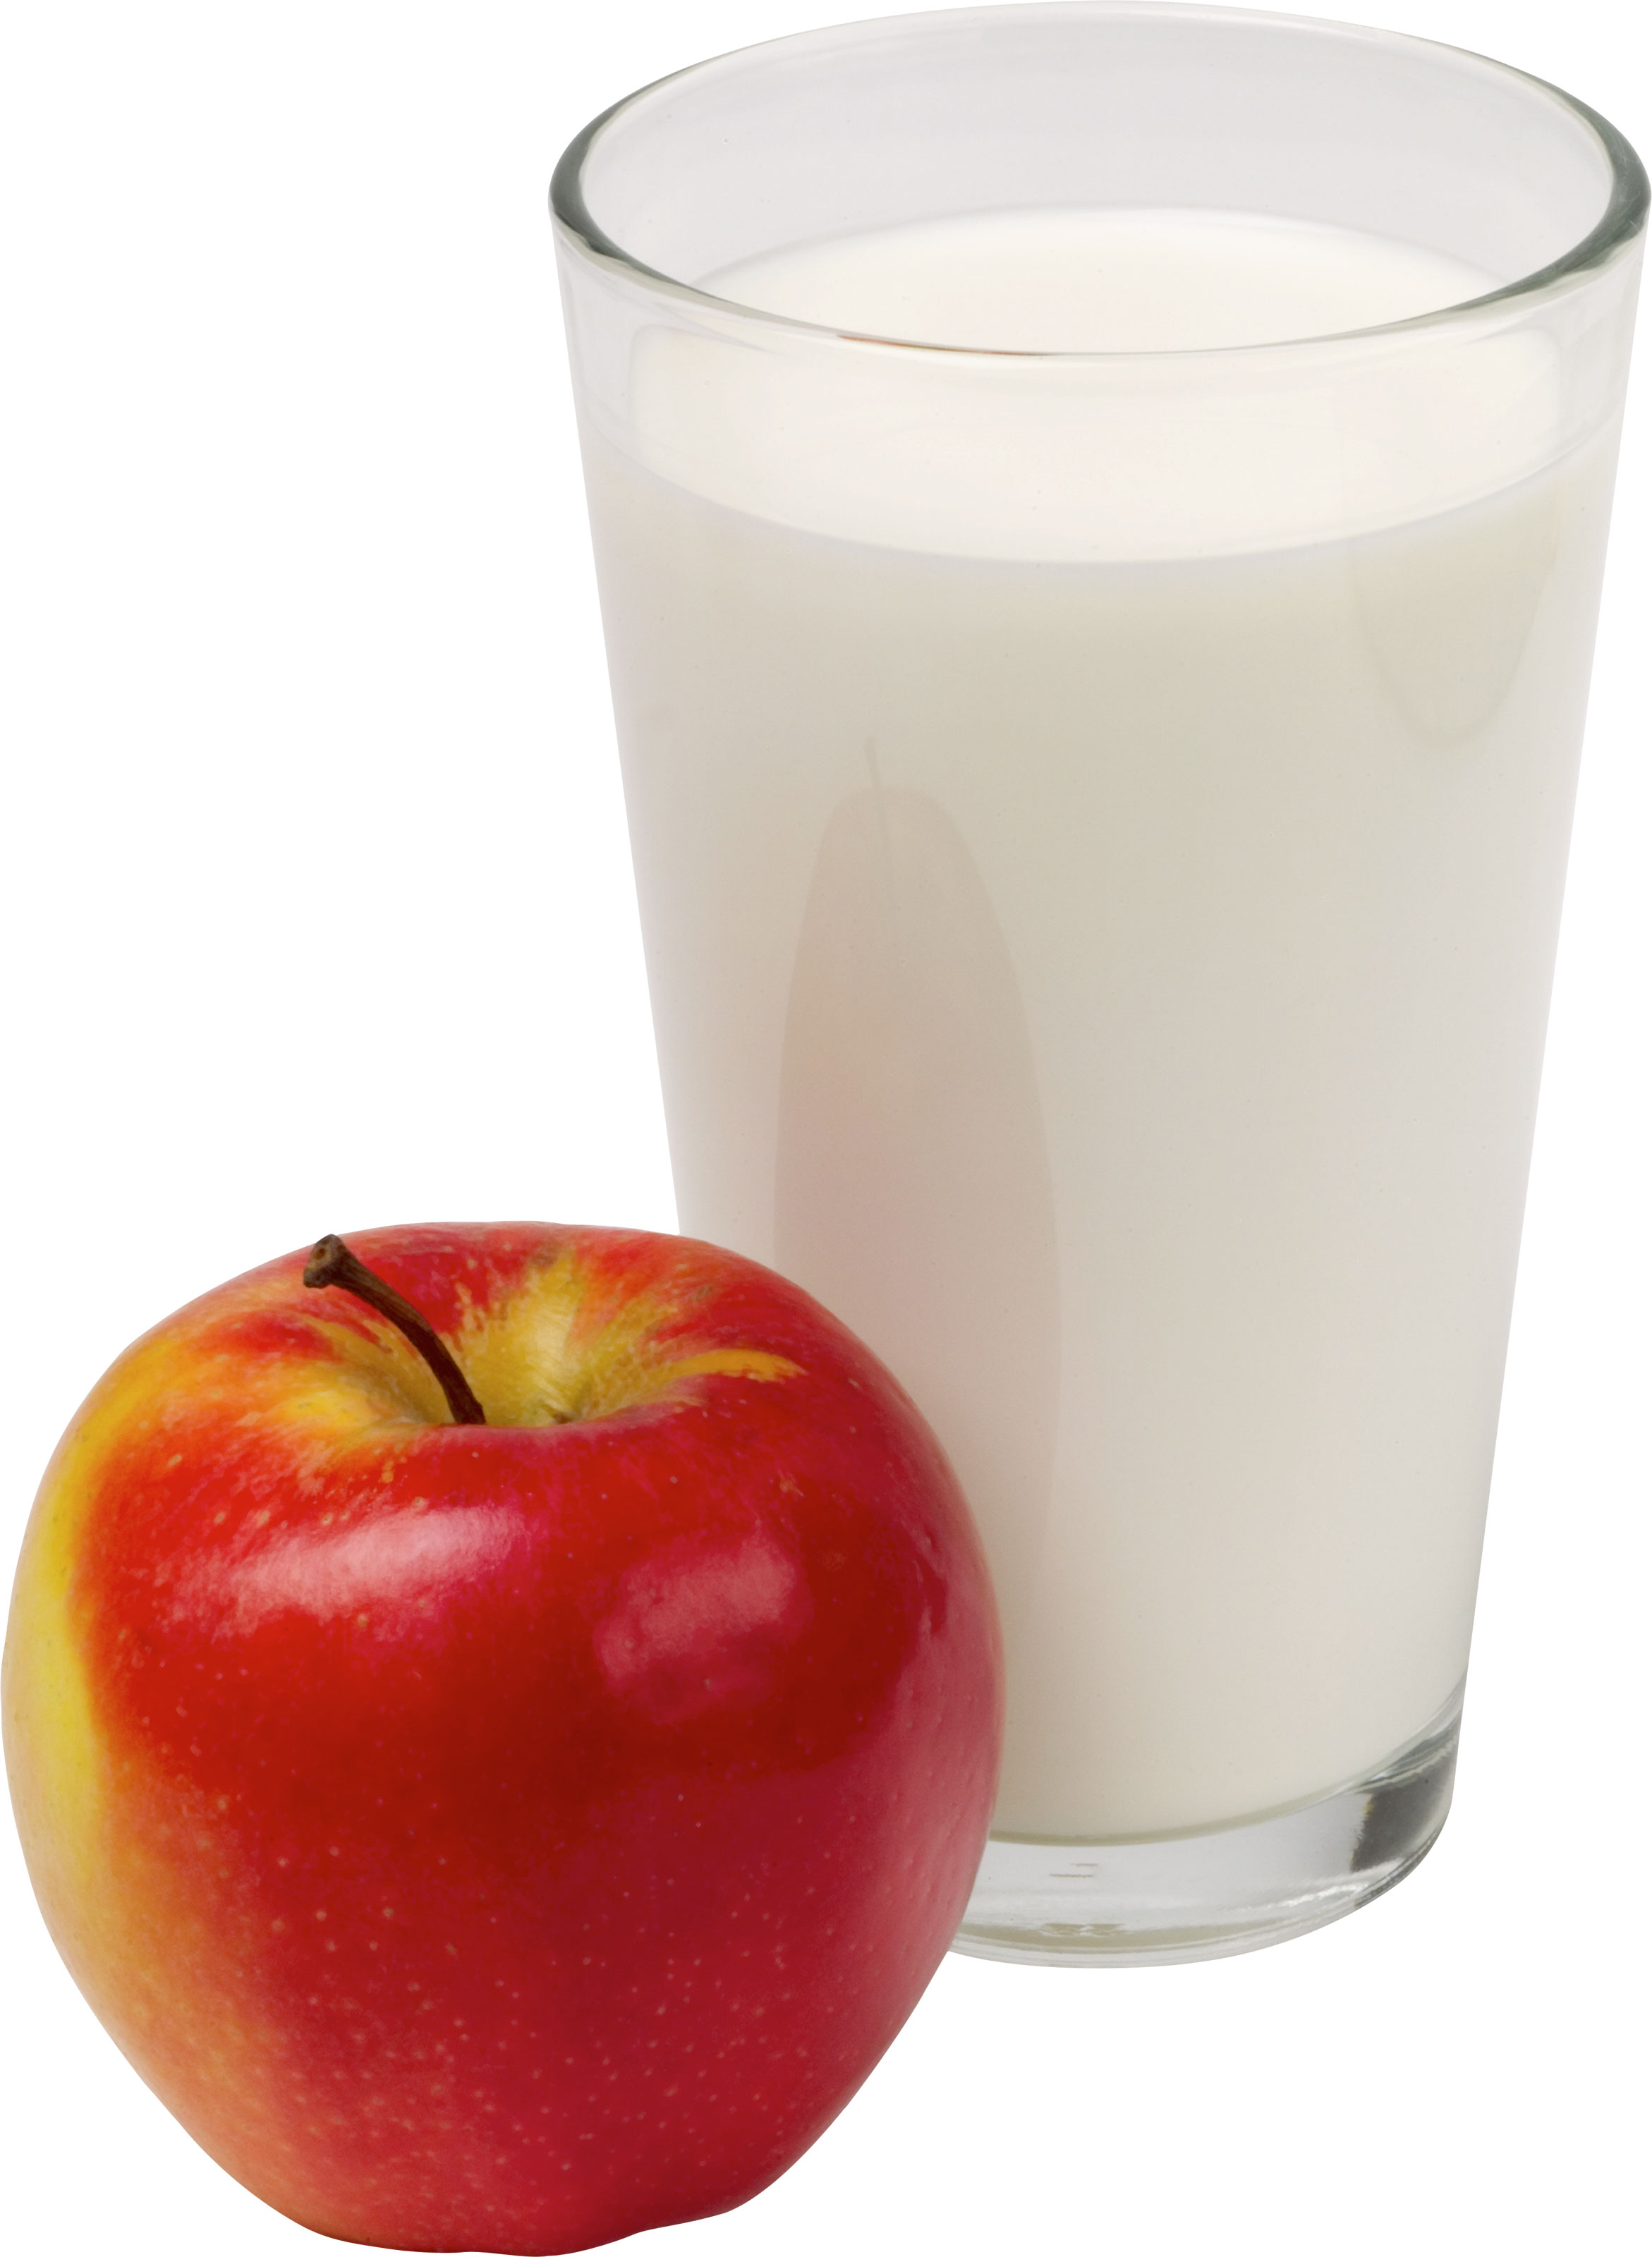 Красное яблоко и стакан молока